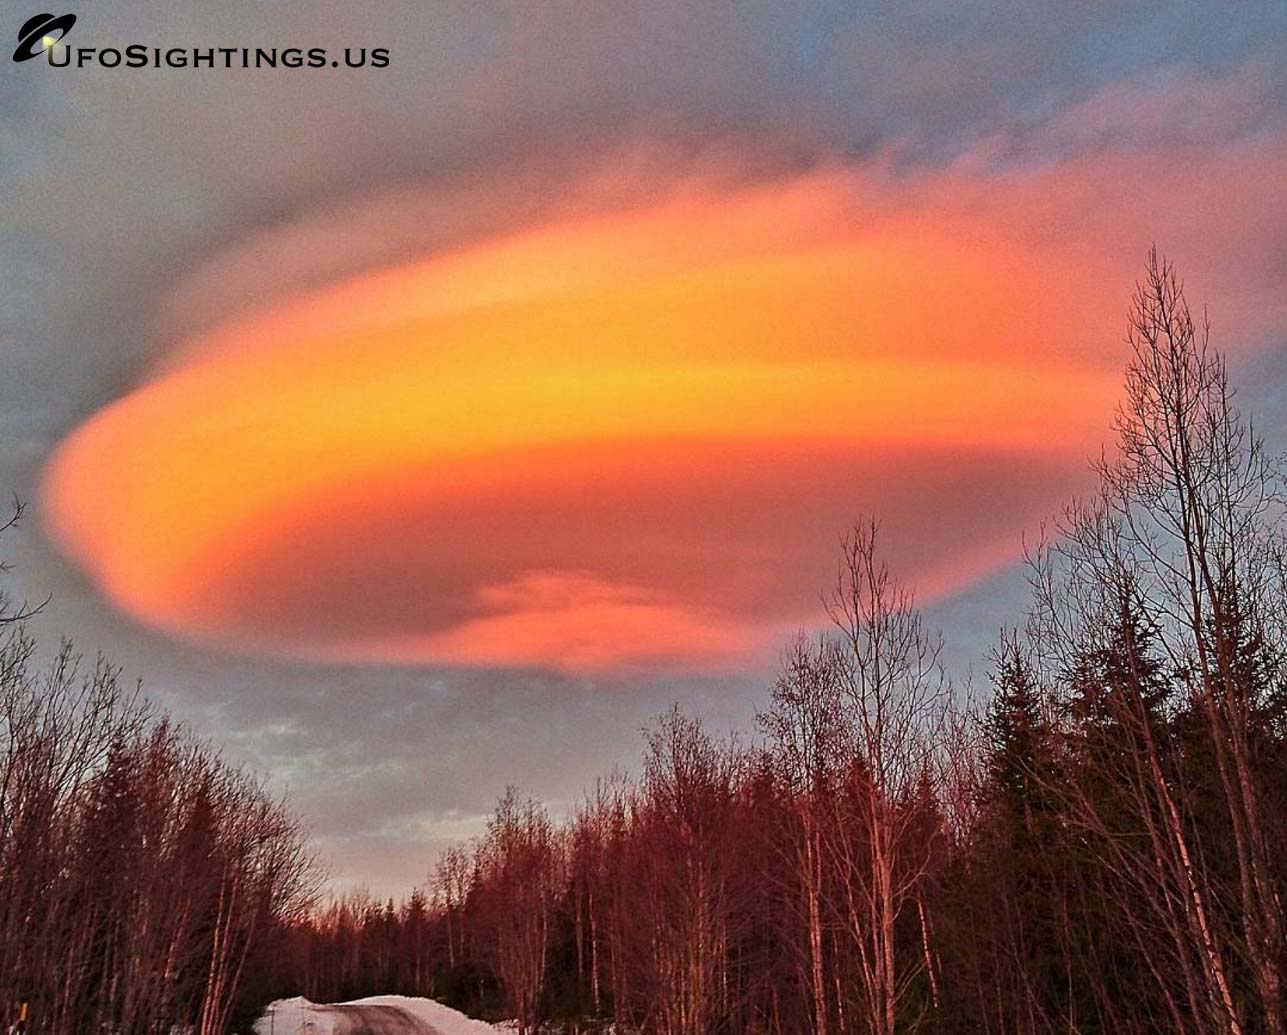 ufo cloud spotted in sweden